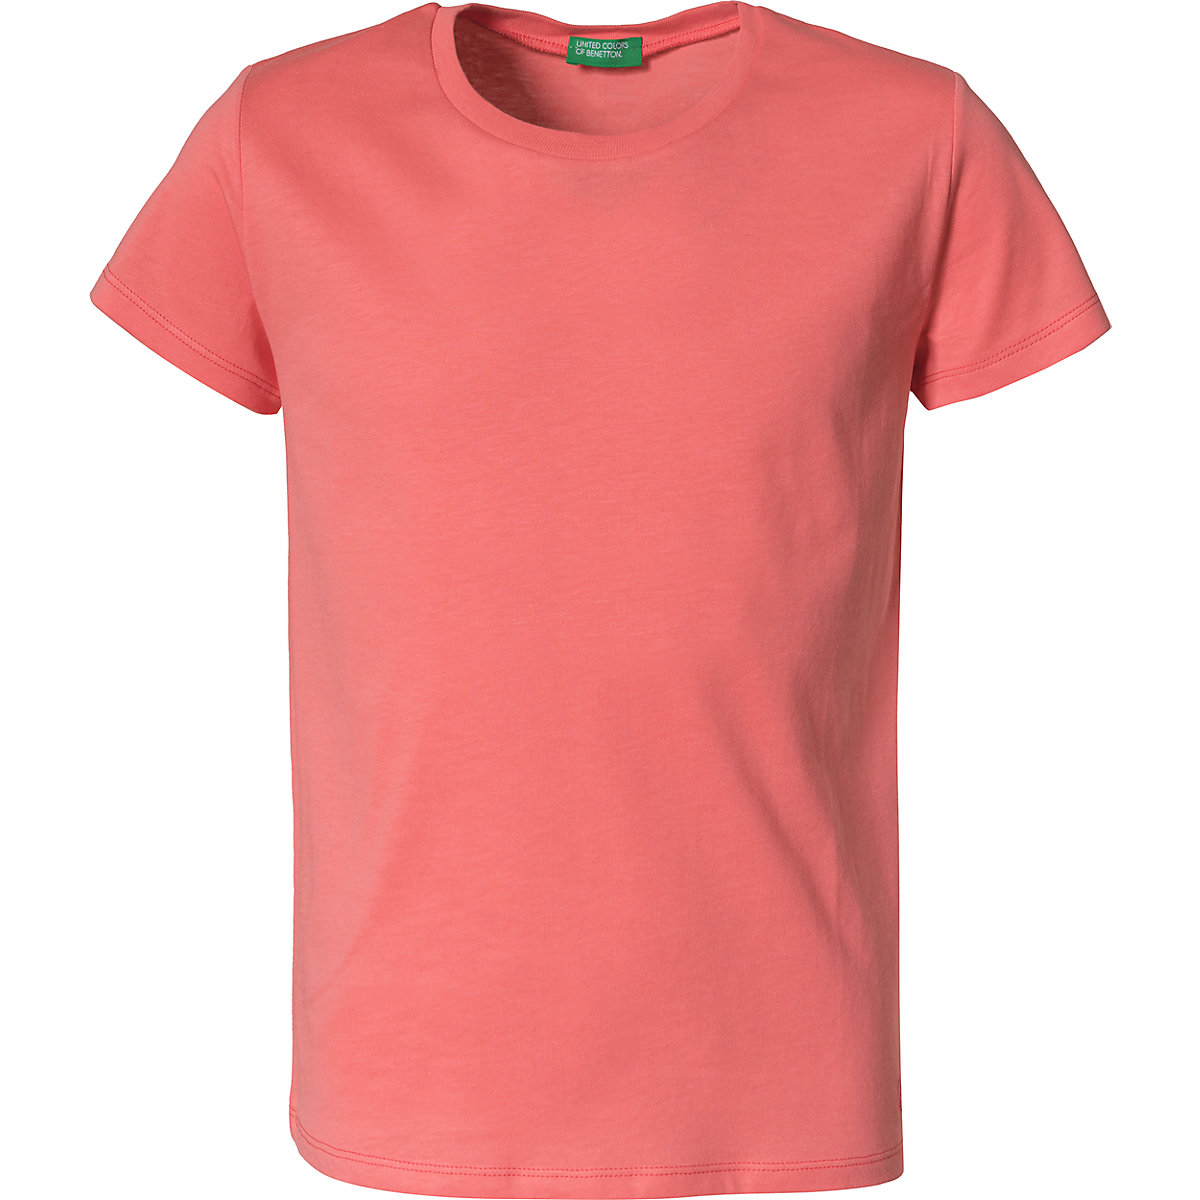 United Colors of Benetton T-Shirt für Mädchen pink Modell 1